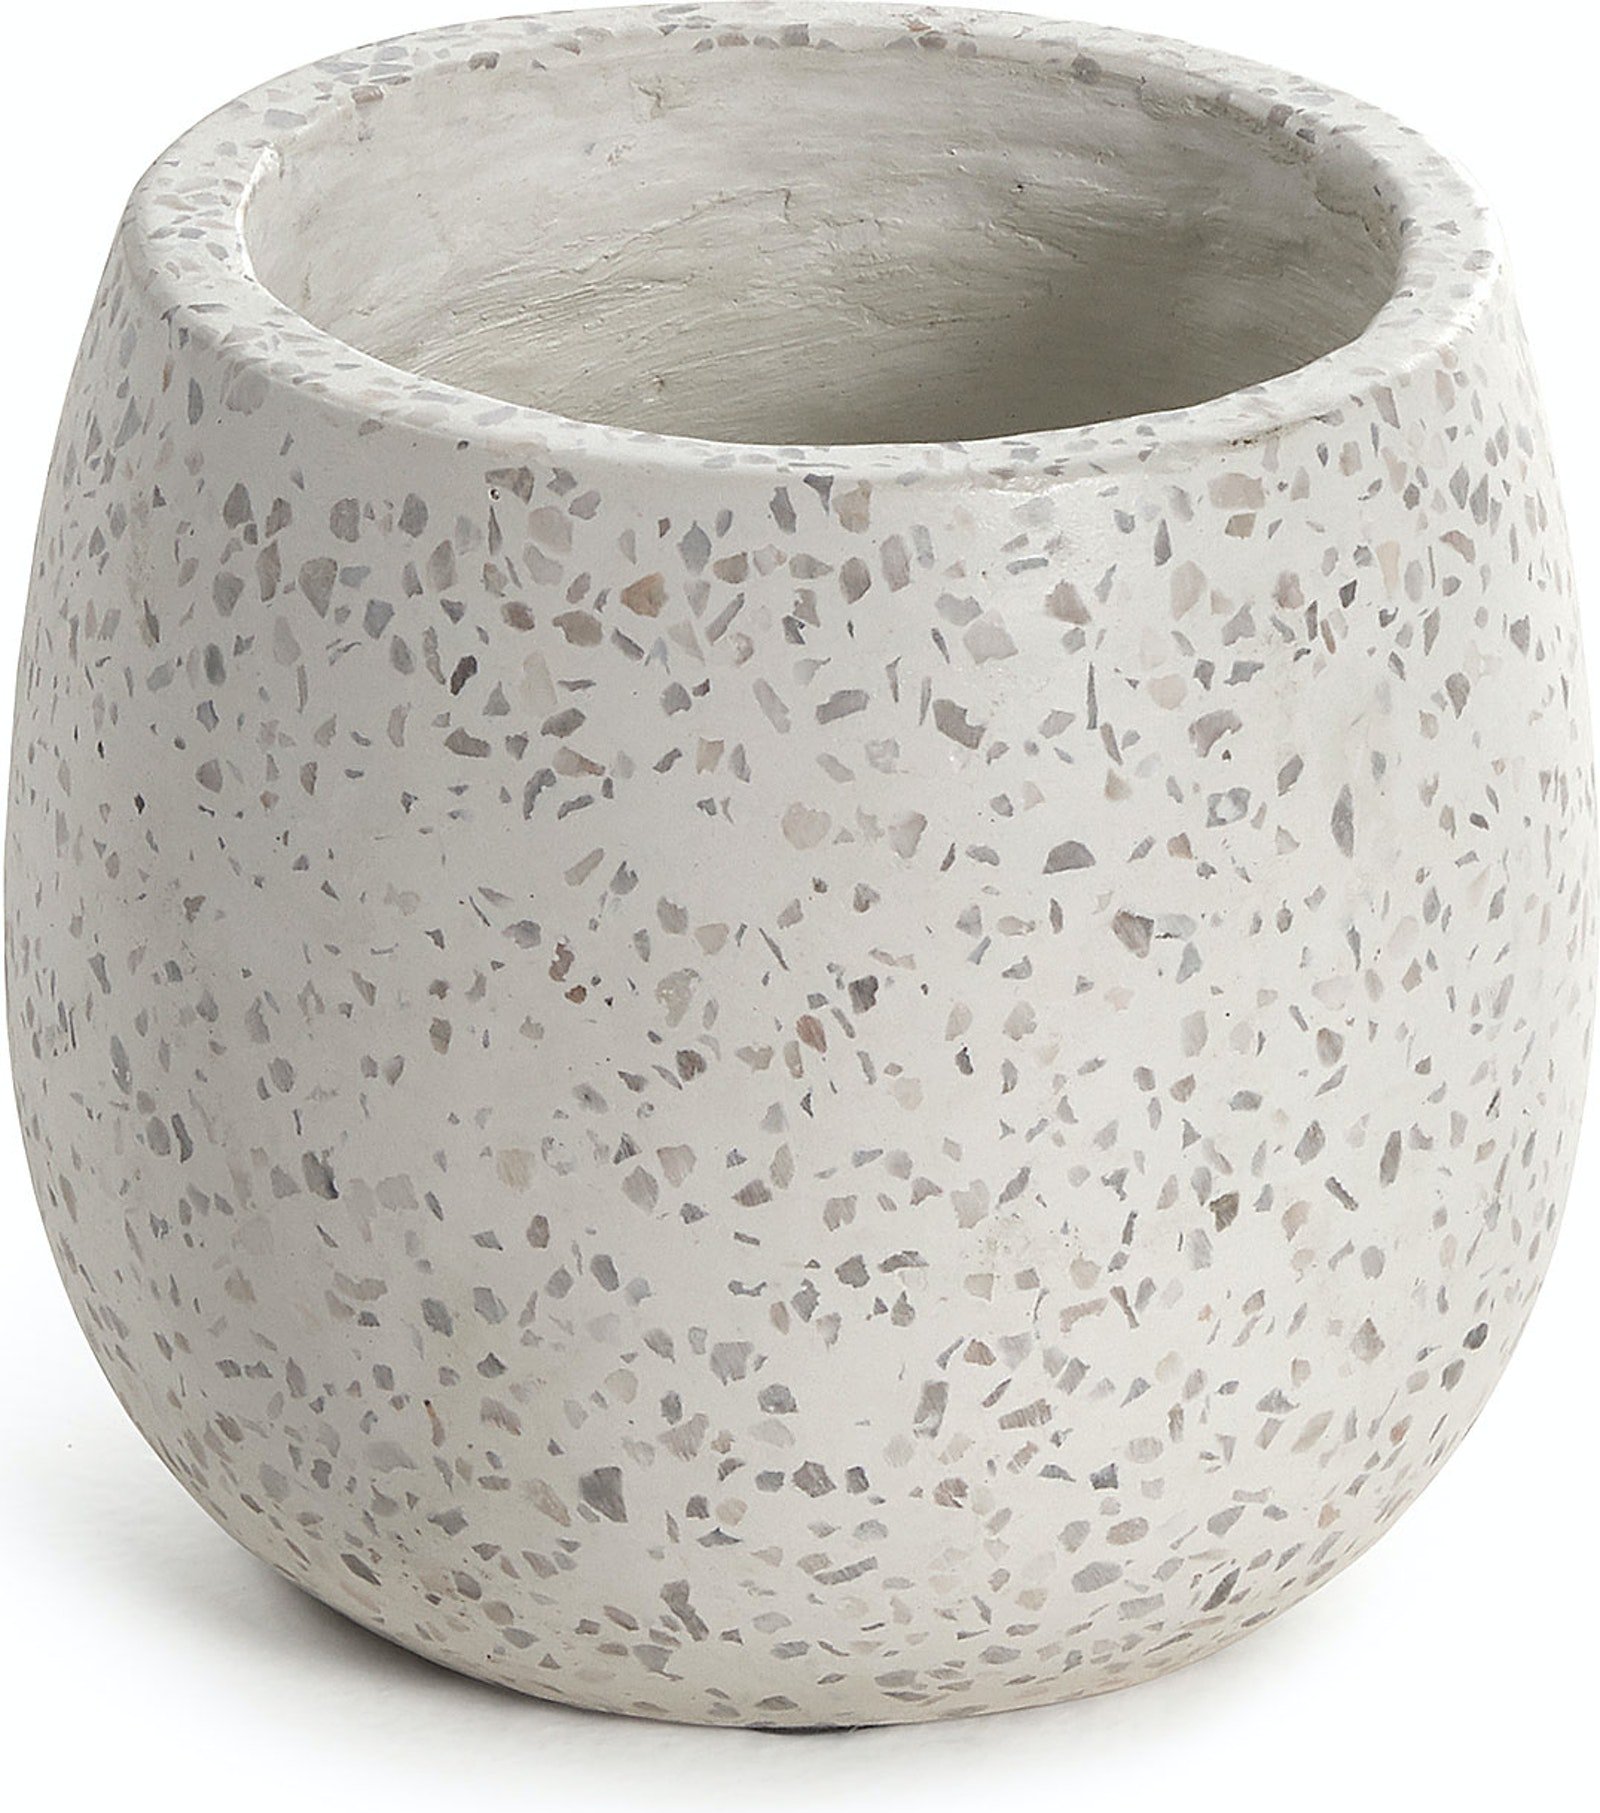 Braydon, Plantepotte, nordisk, moderne, keramik by LaForma (H: 14 cm. B: 15 cm. L: 15 cm., Beige)